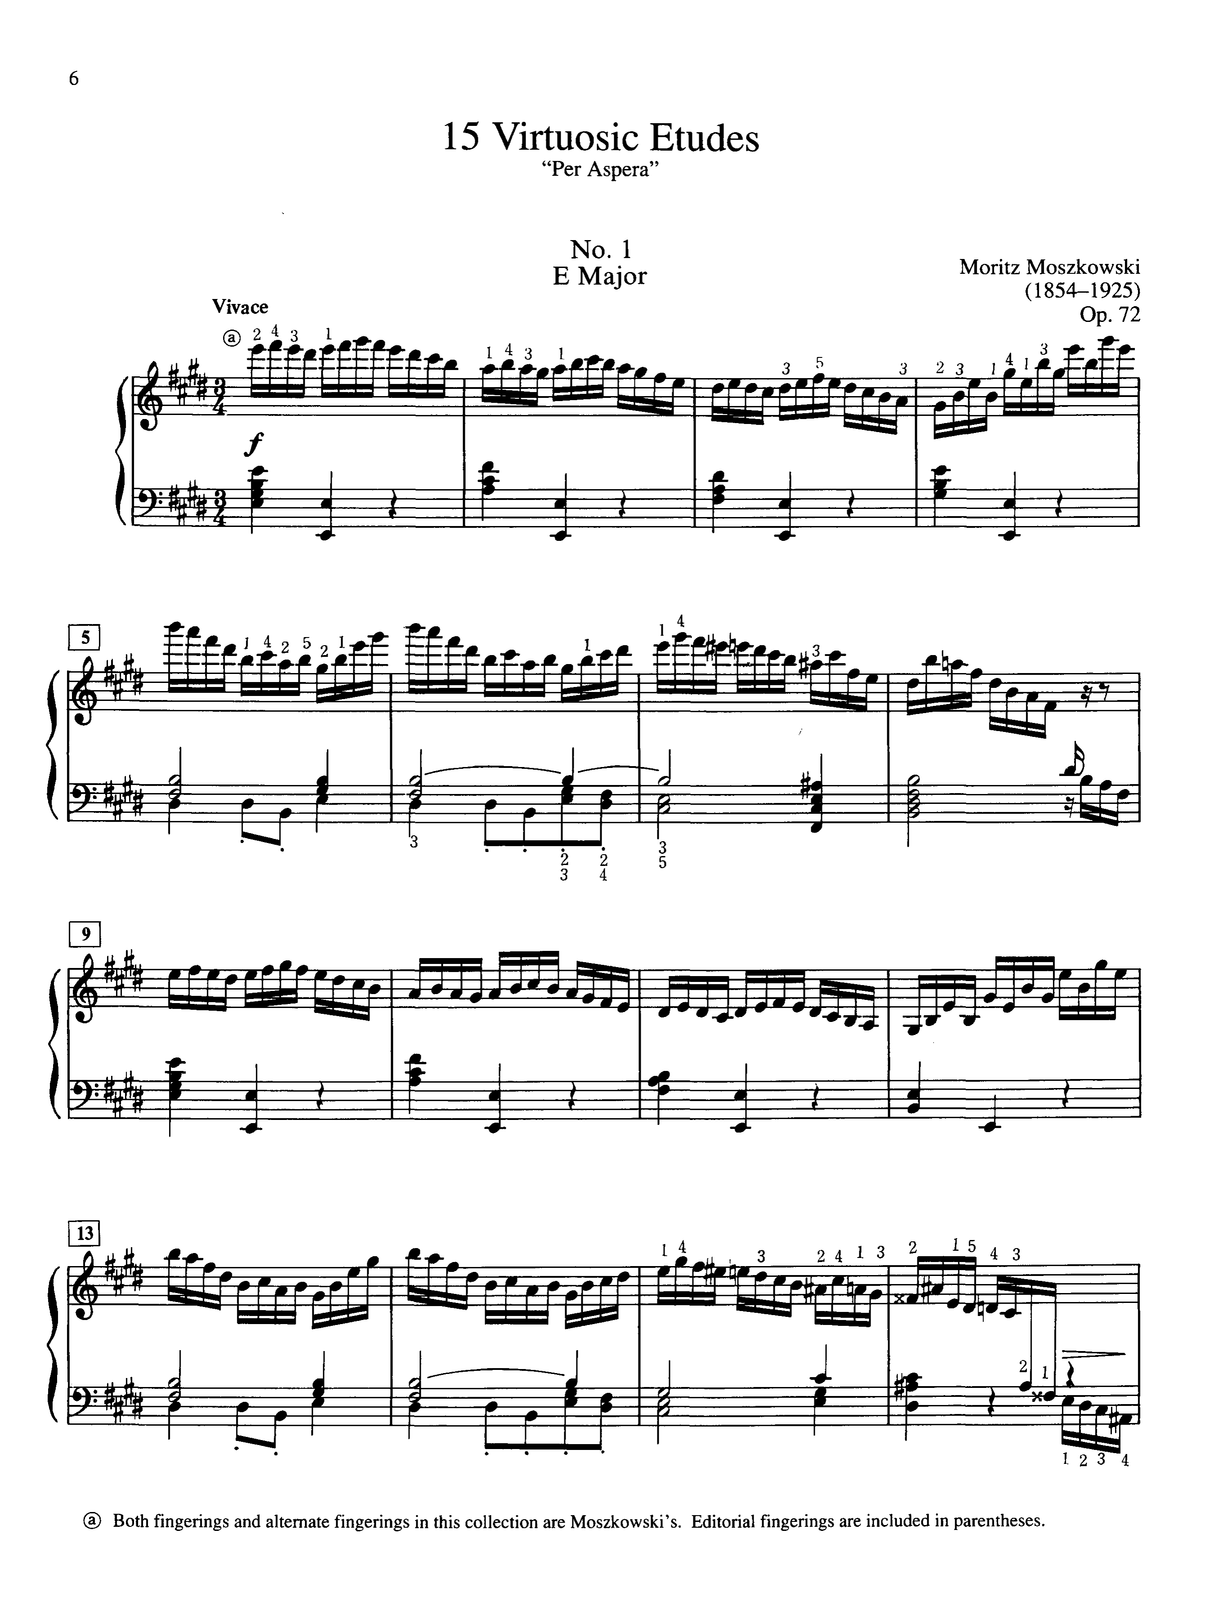 Moszkowski: 15 Virtuosic Etudes, Op. 72